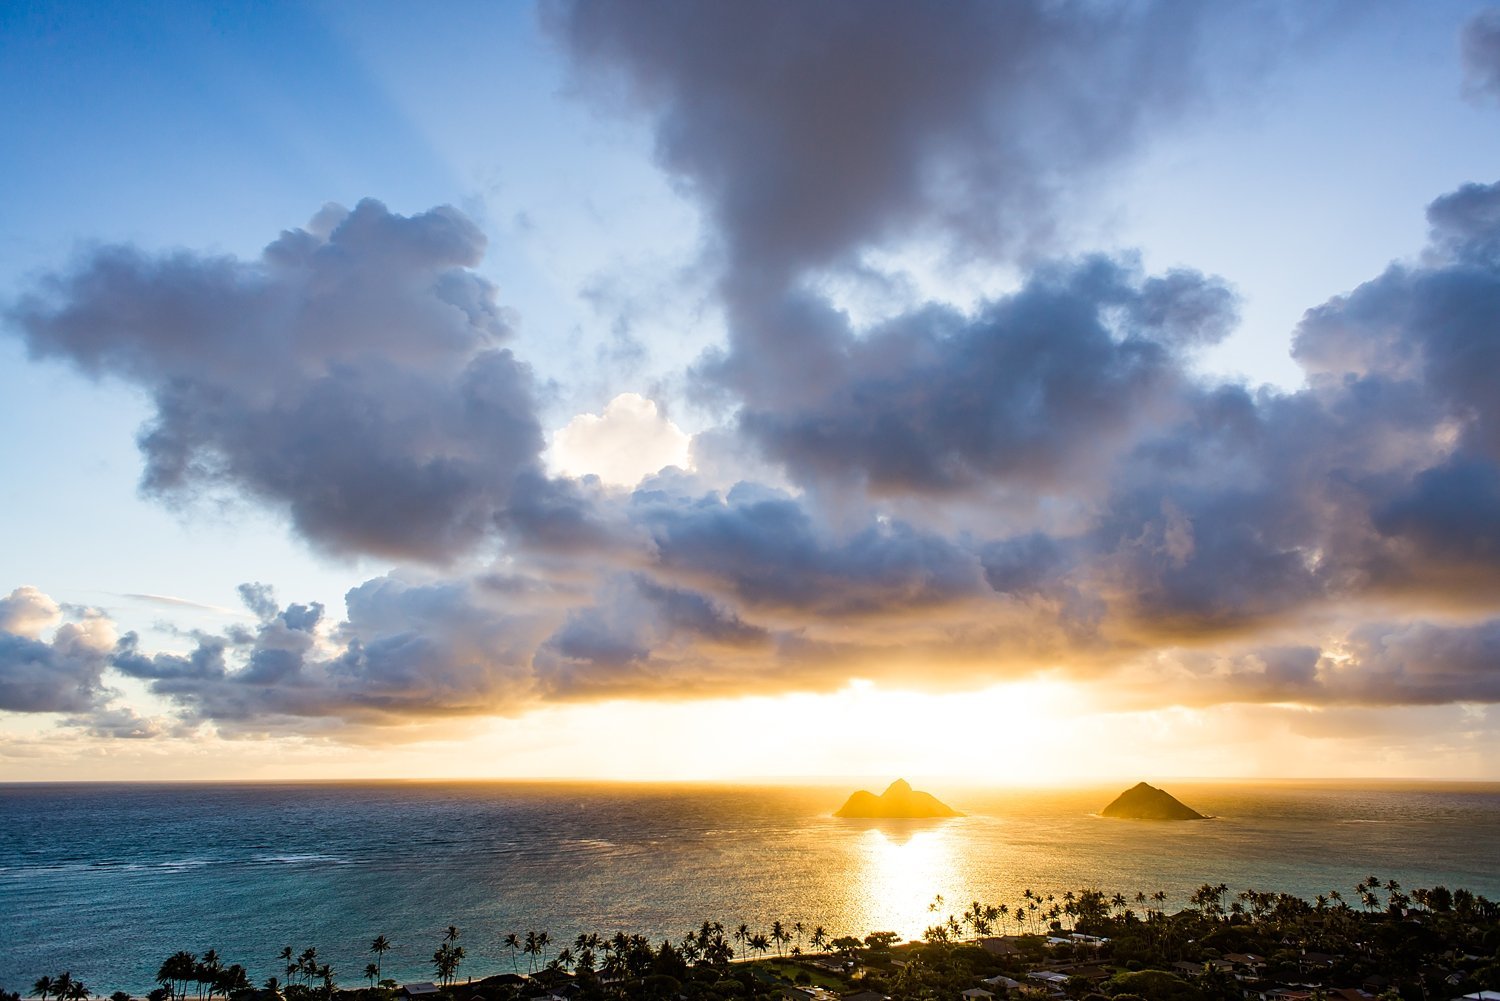 Sunrise over the Pacific ocean and the Na Mokulua twin islands of Oahu